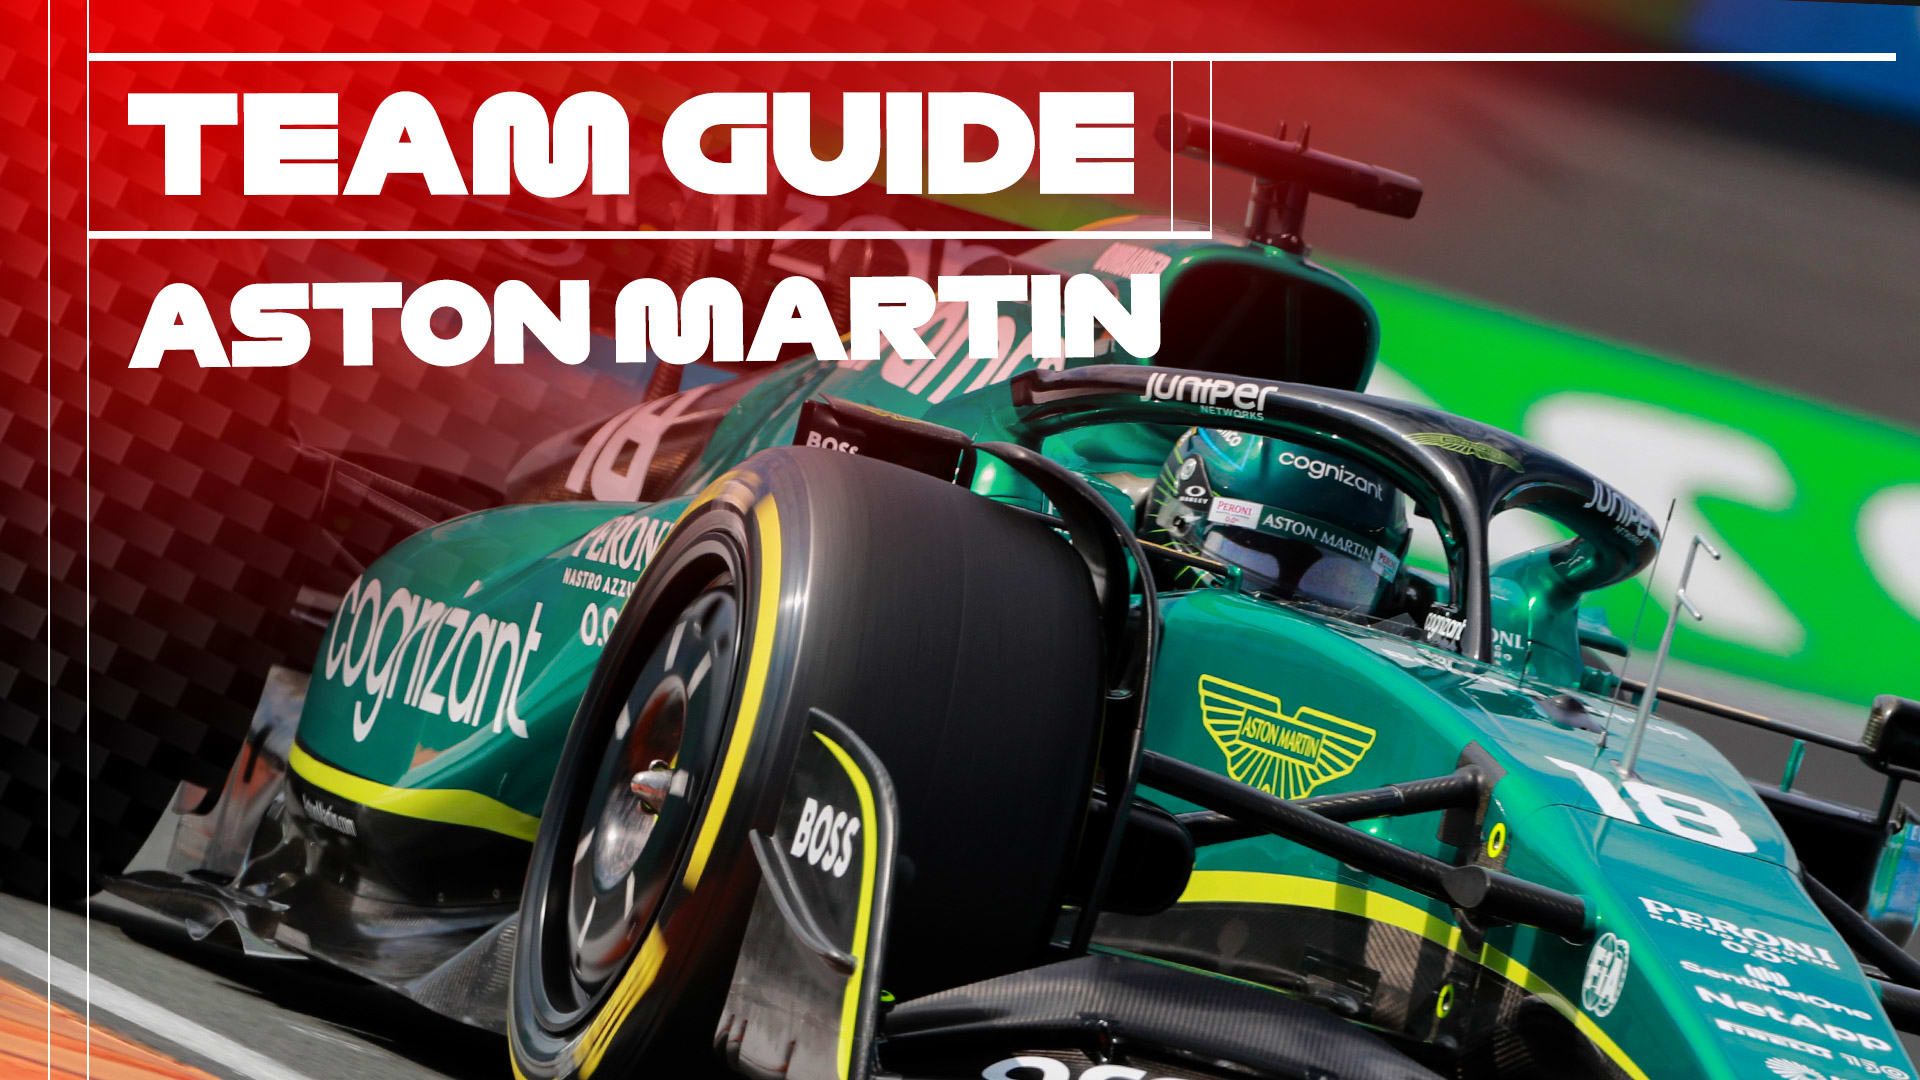 Homepage - Aston Martin F1 Team